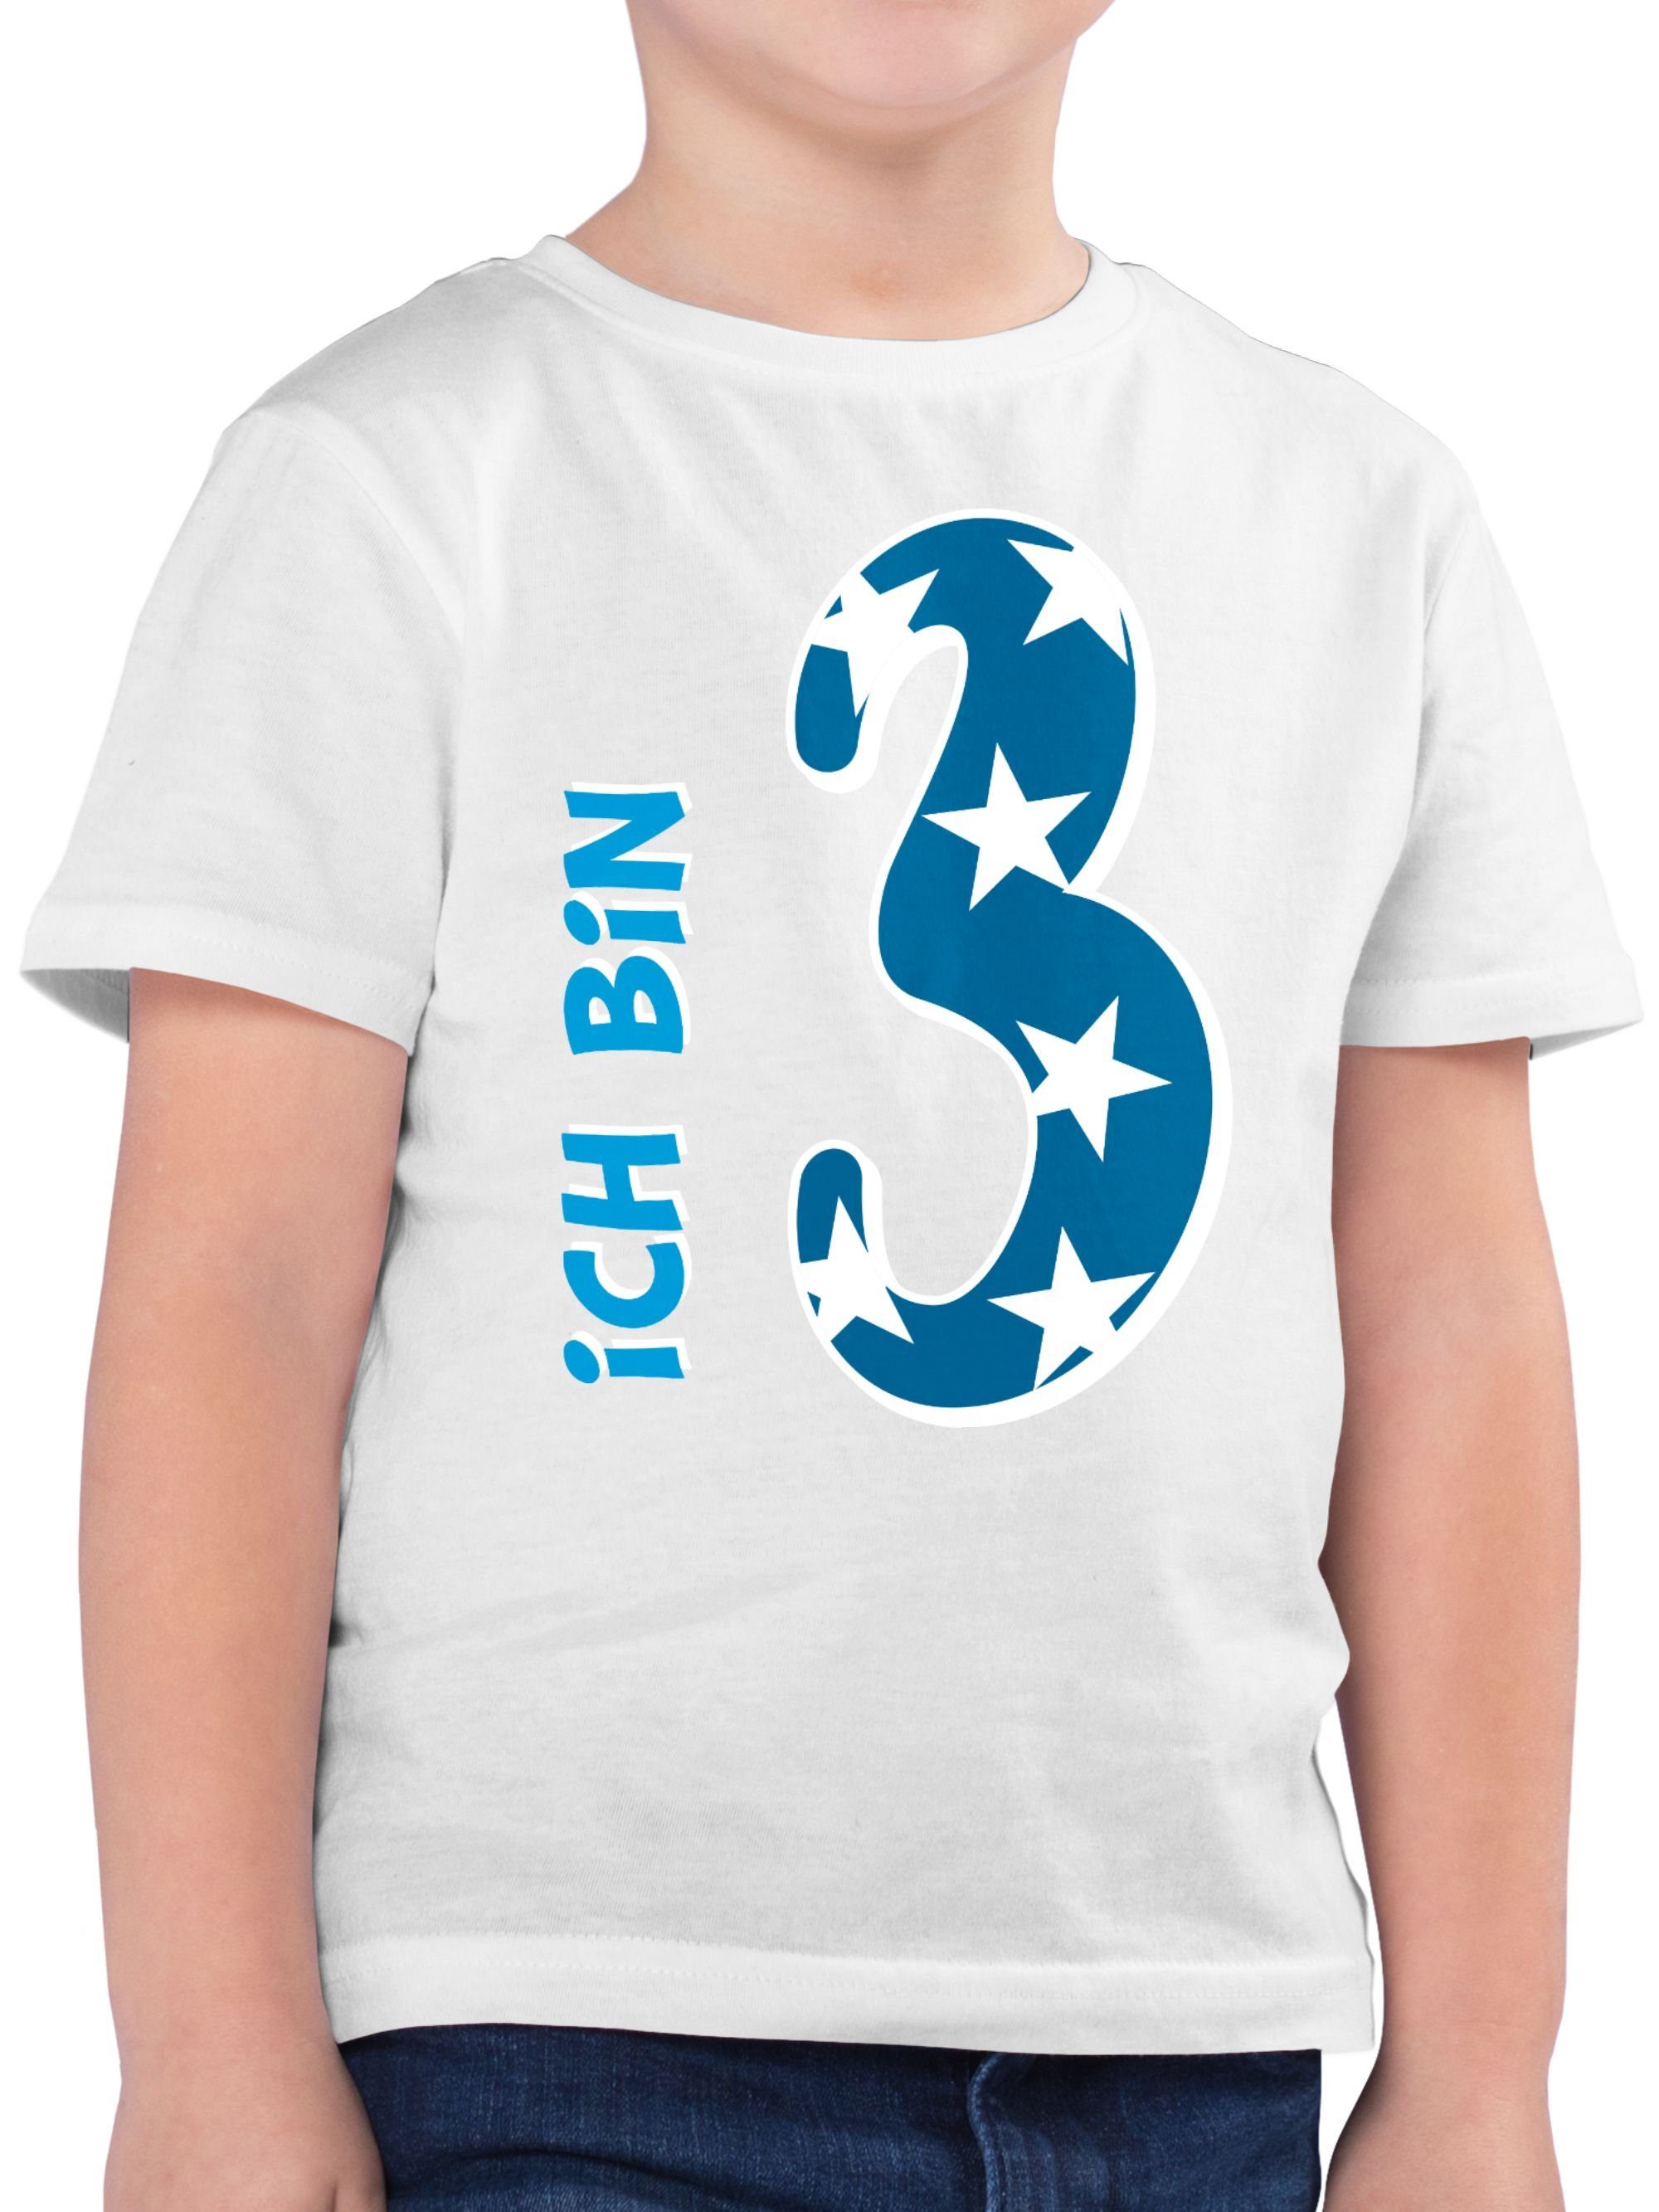 Kinder Kids (Gr. 92 - 146) Shirtracer T-Shirt Ich bin 3 Blau Junge - 3. Geburtstag - Jungen Kinder T-Shirt